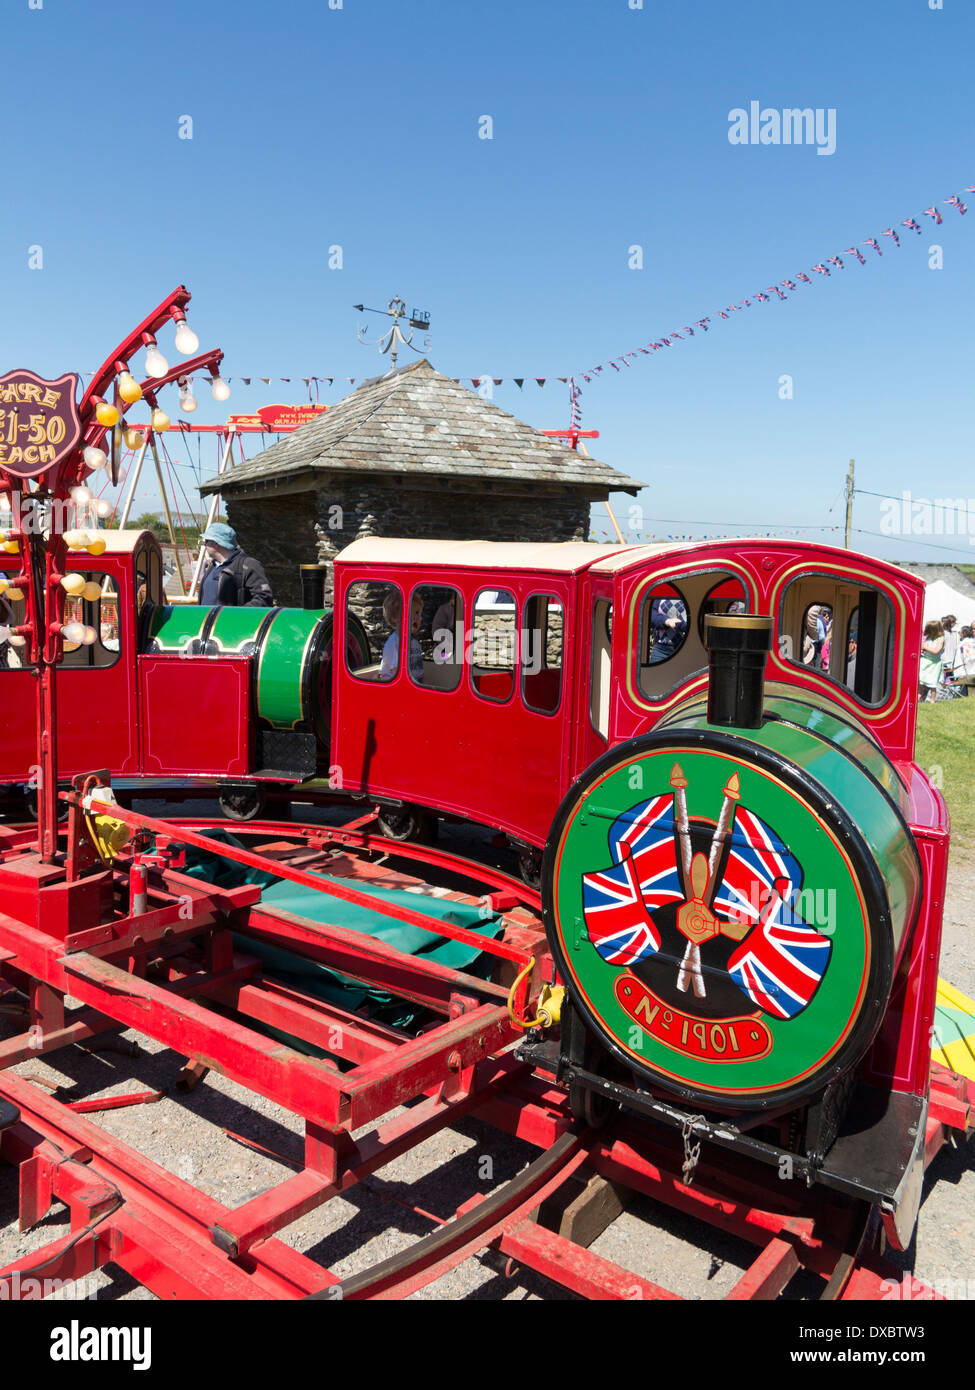 Summer fete or fayre, East Prawle, South Devon. Children's train ride Stock Photo